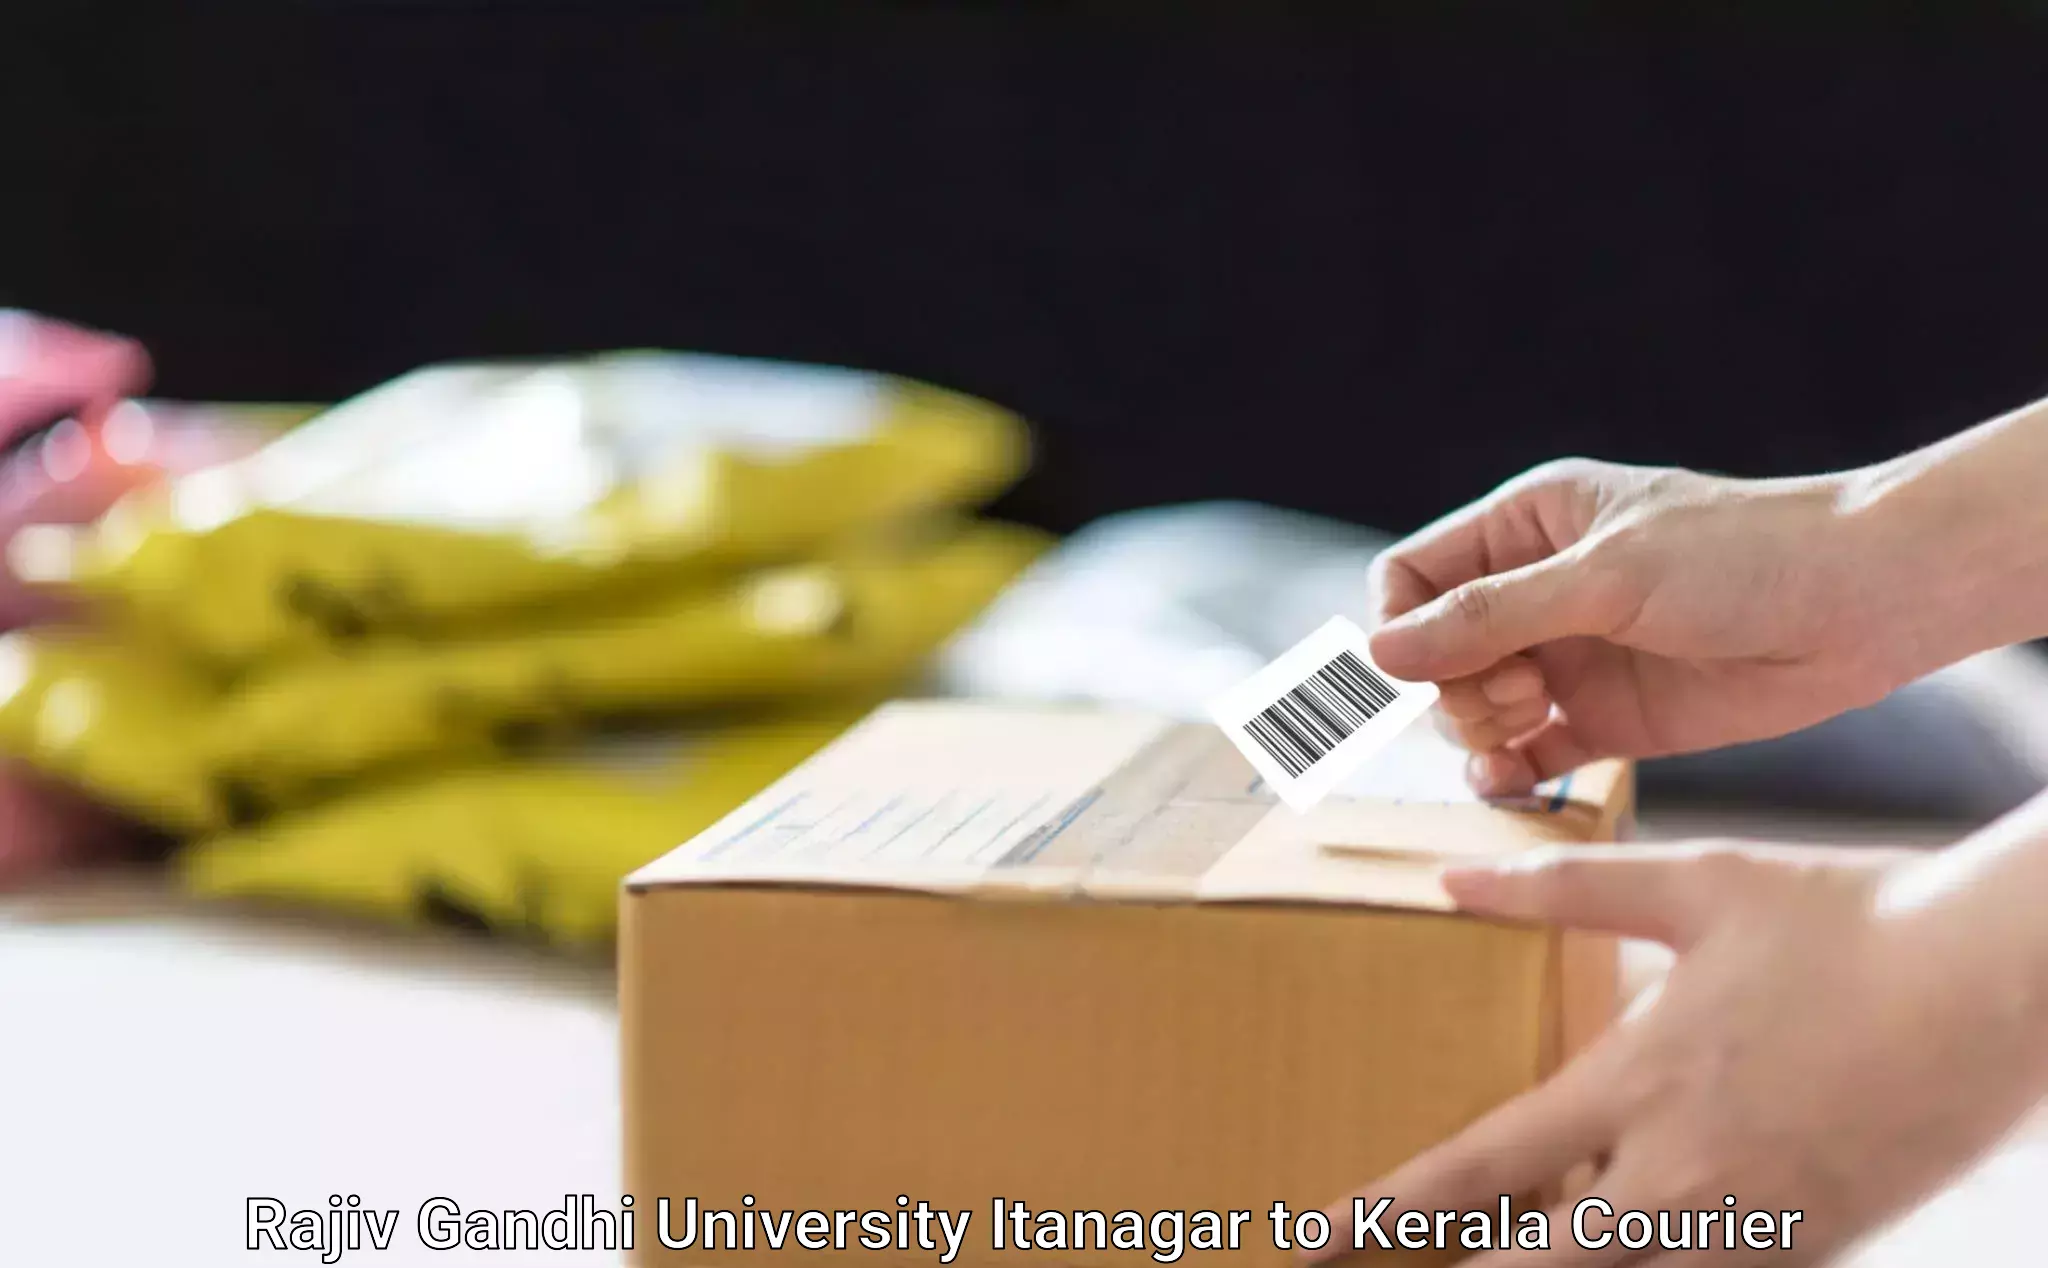 Package delivery network Rajiv Gandhi University Itanagar to Kalpetta